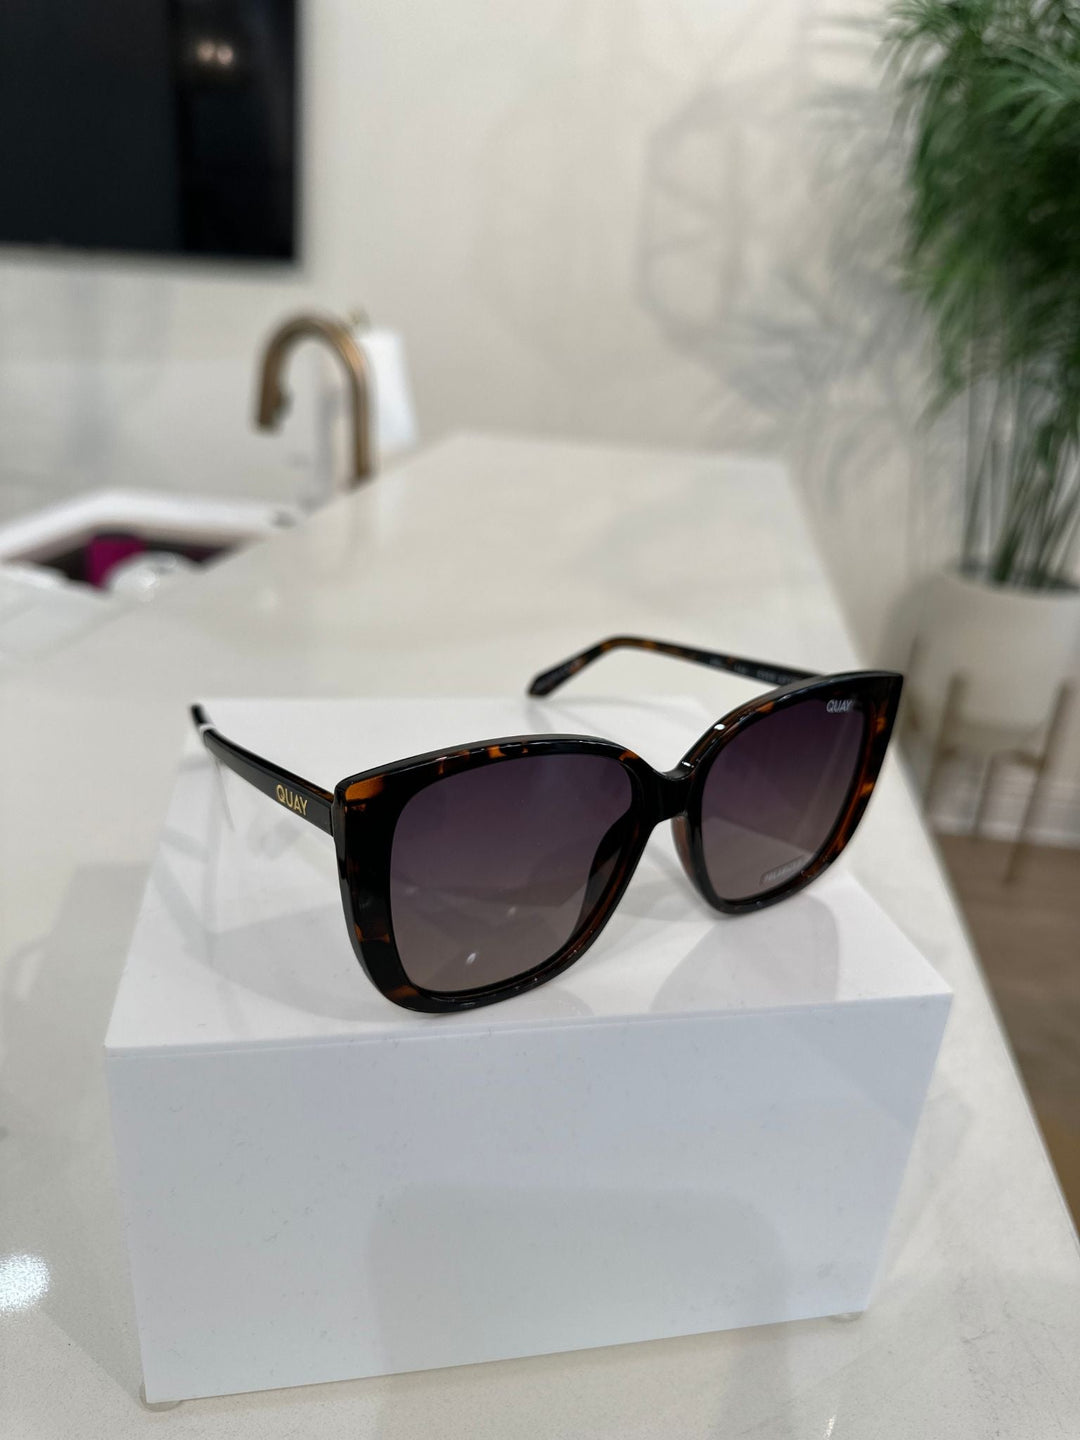 QUAY High Roller Sunglasses - Gold/BrownSunglasses